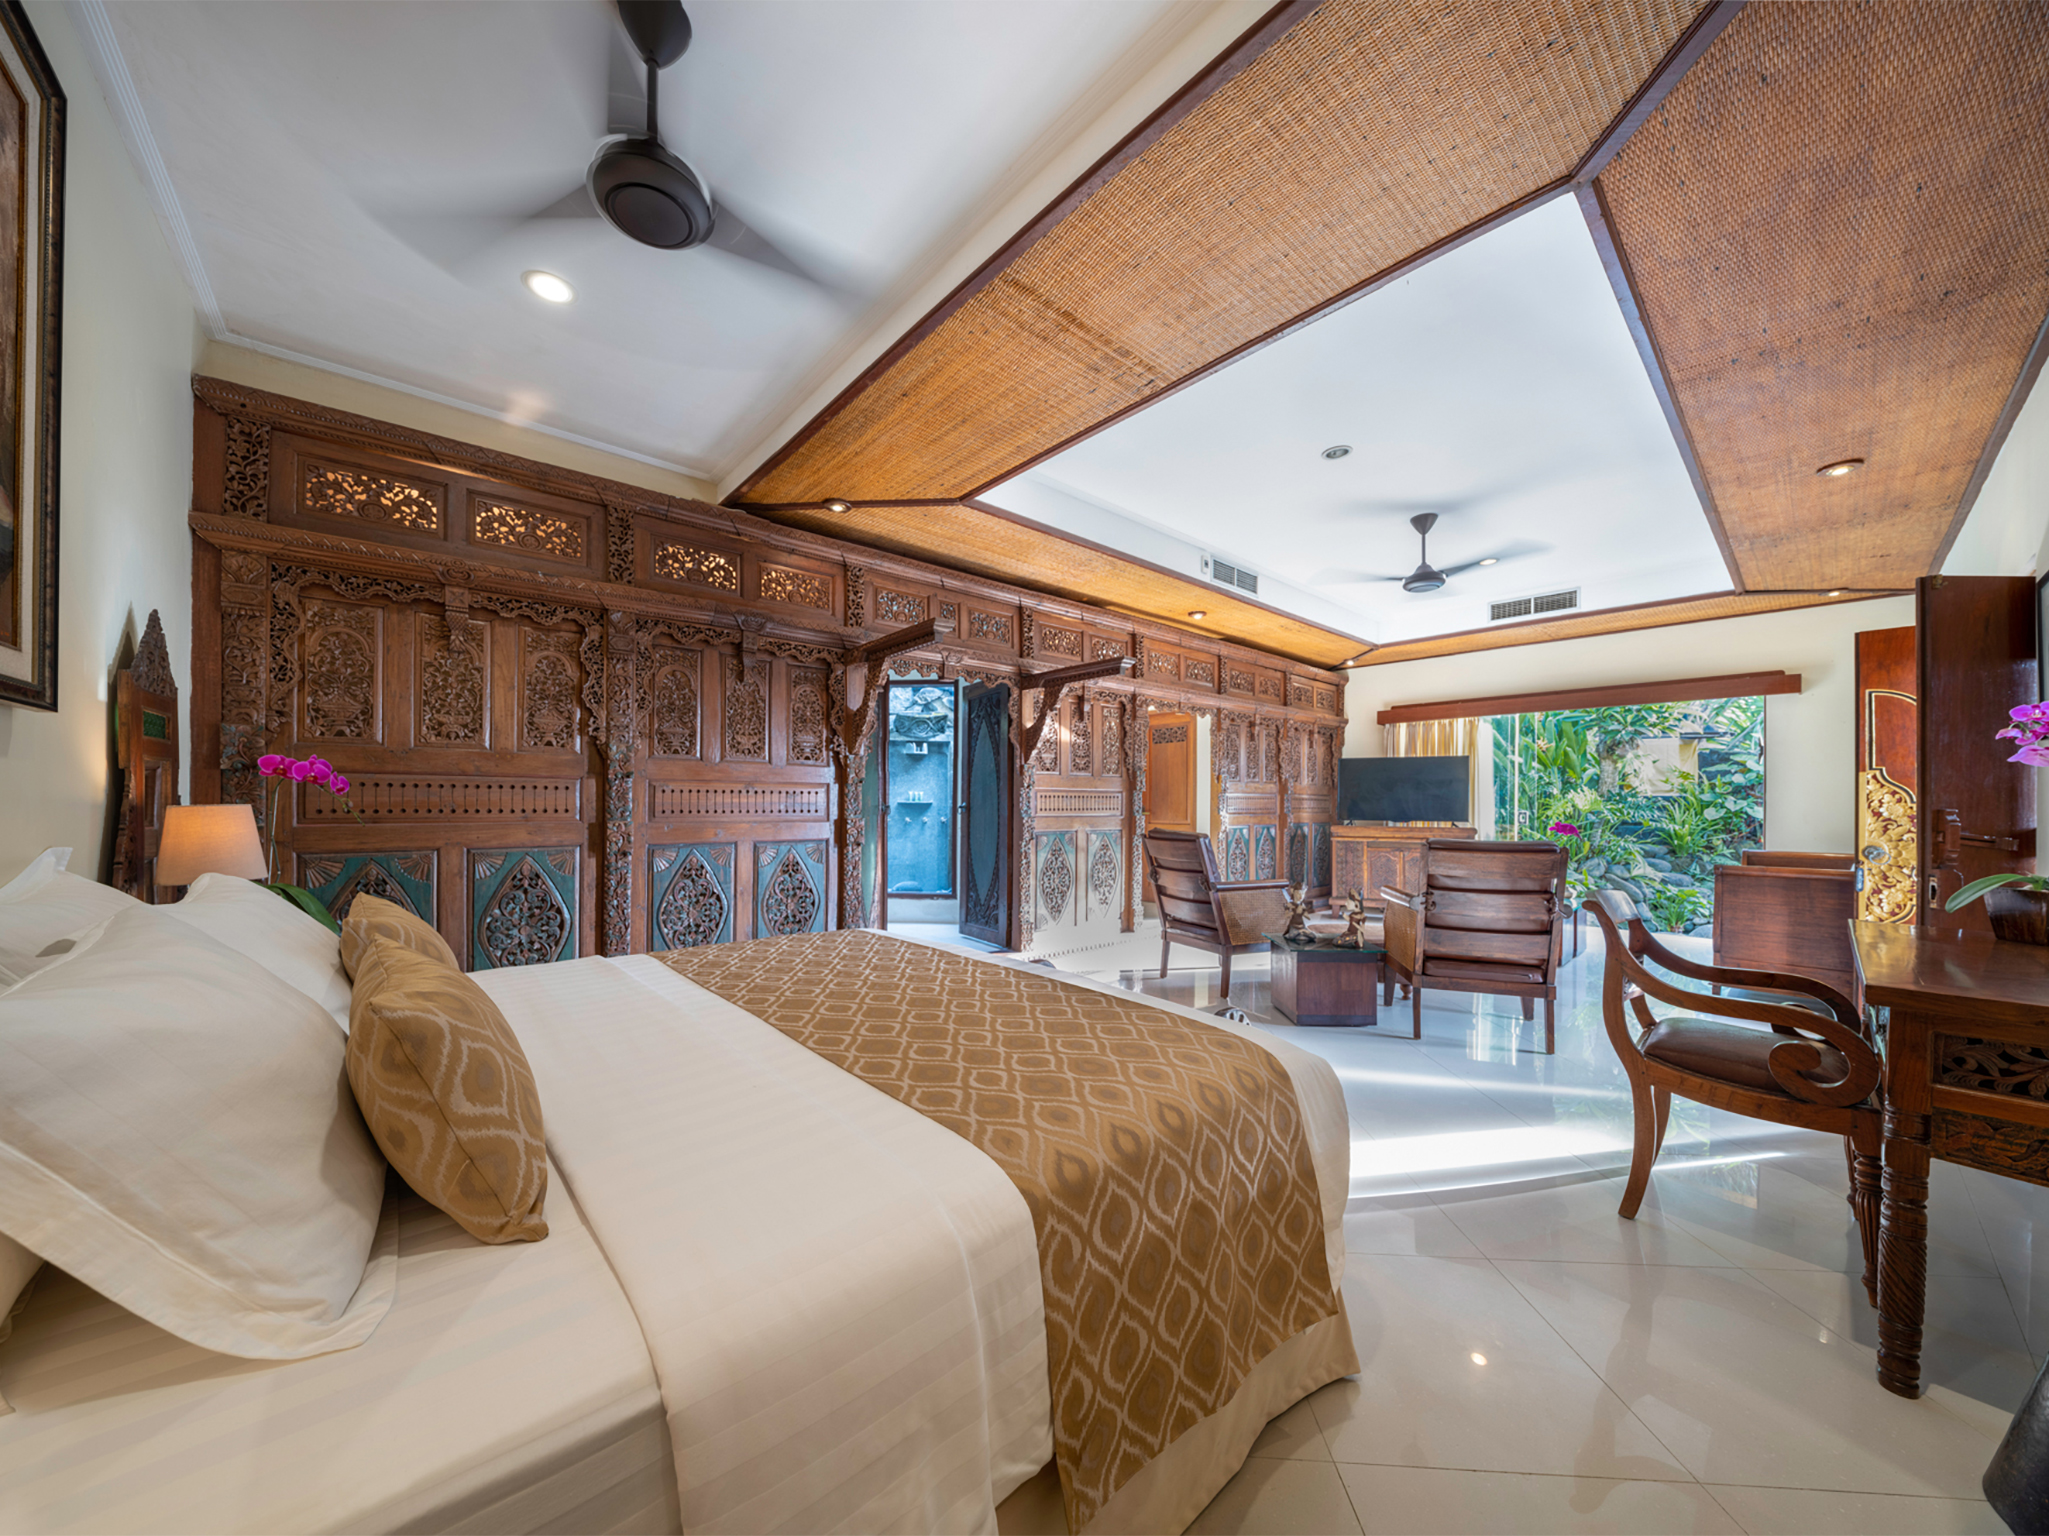 Villa Cemara - Master pavilion and stunning view - Villa Cemara, Sanur, Bali